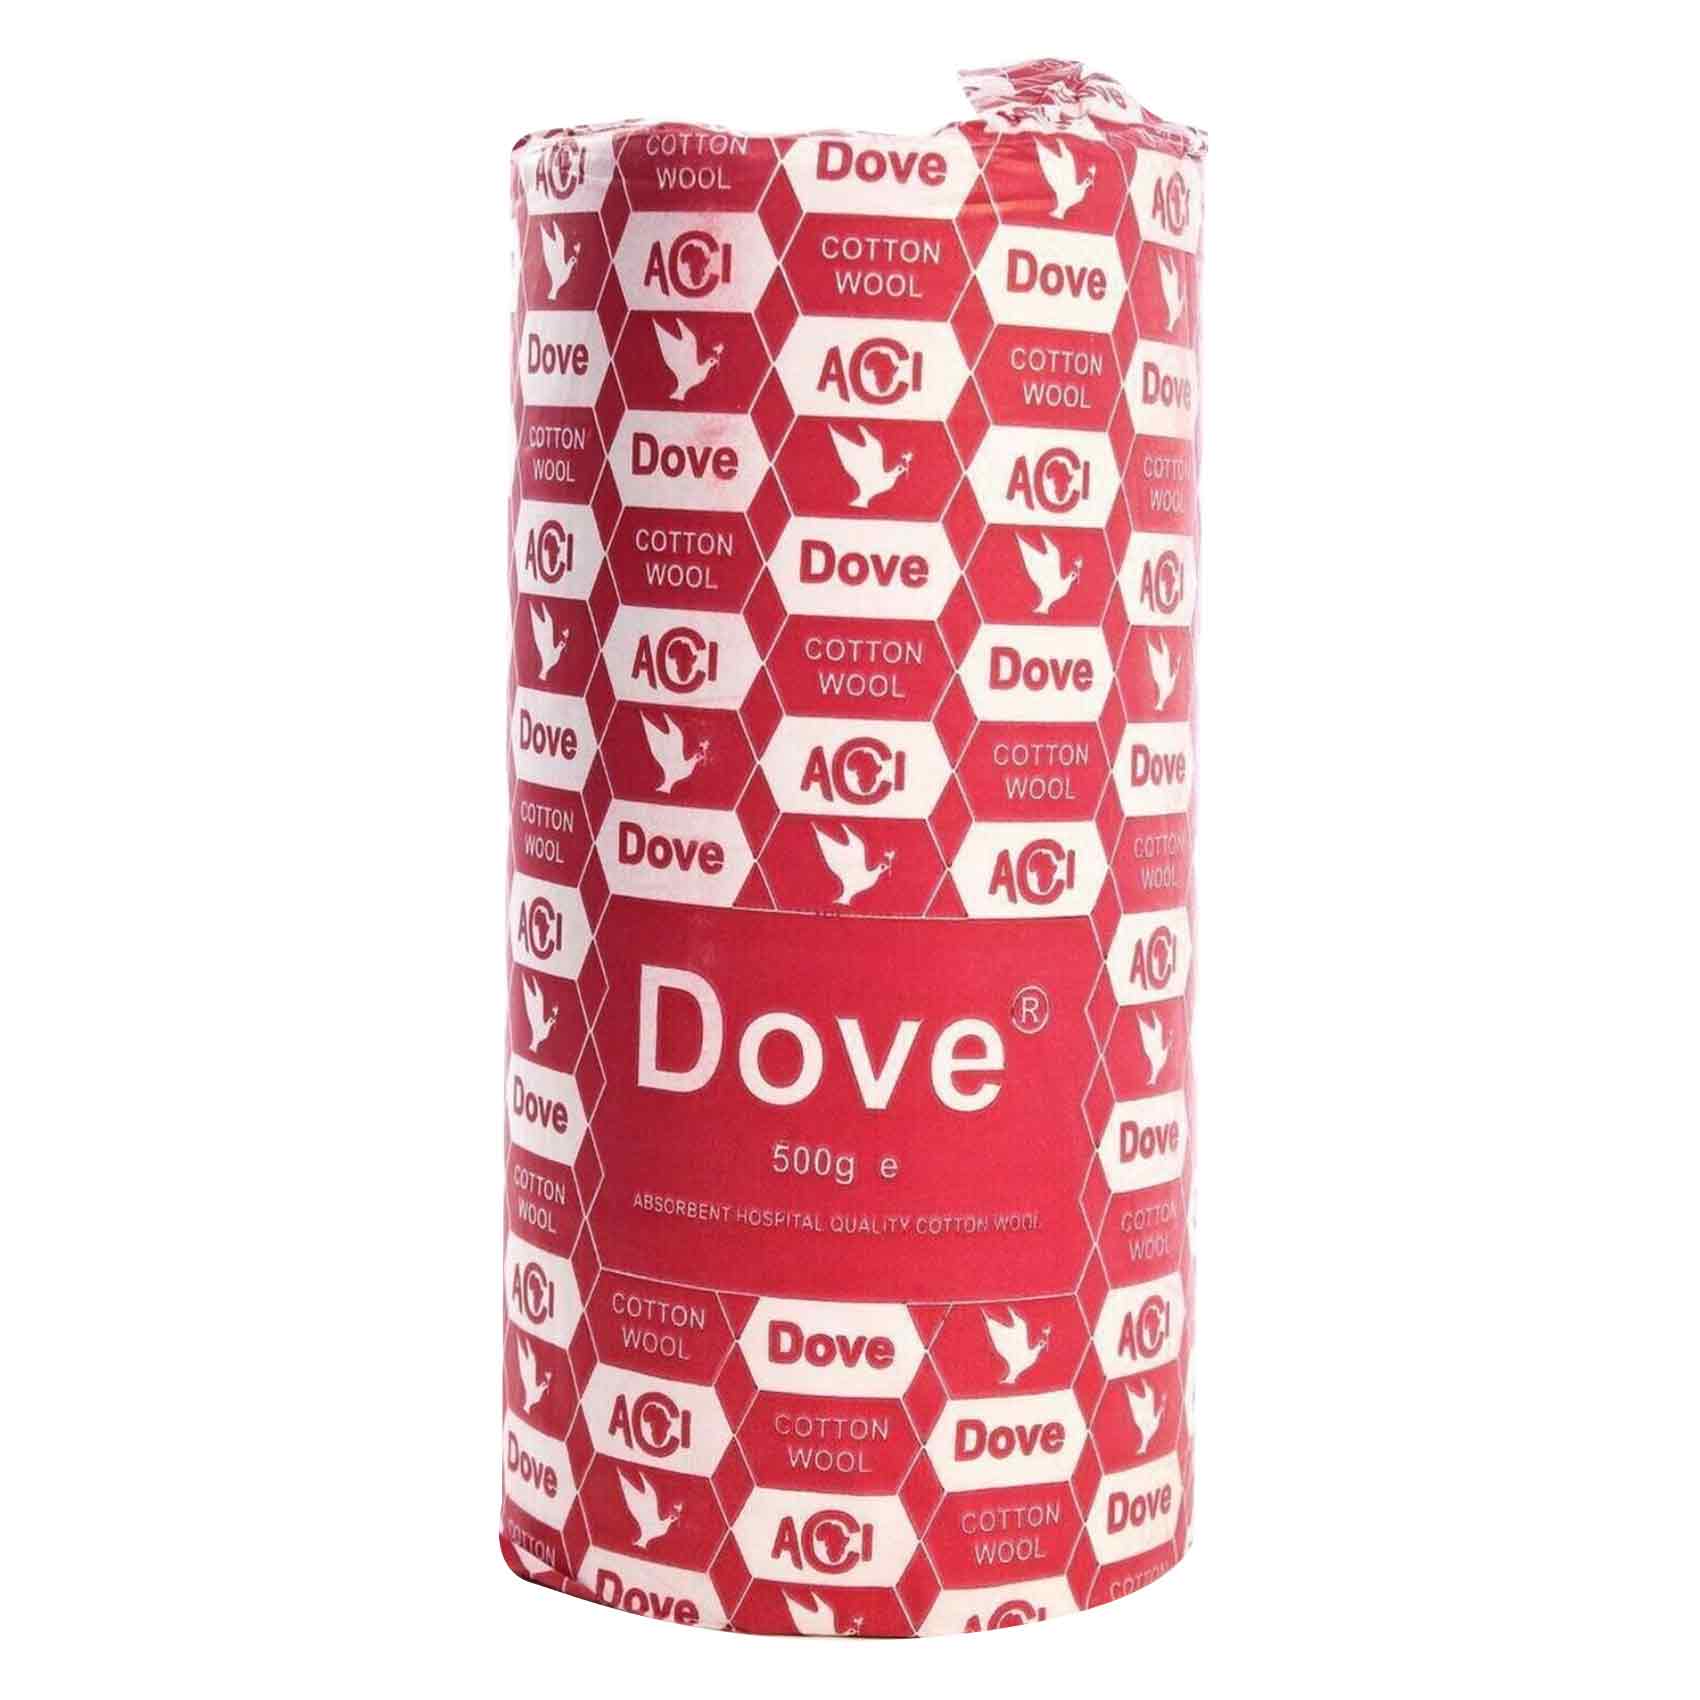 Dove Cotton Wool 500g